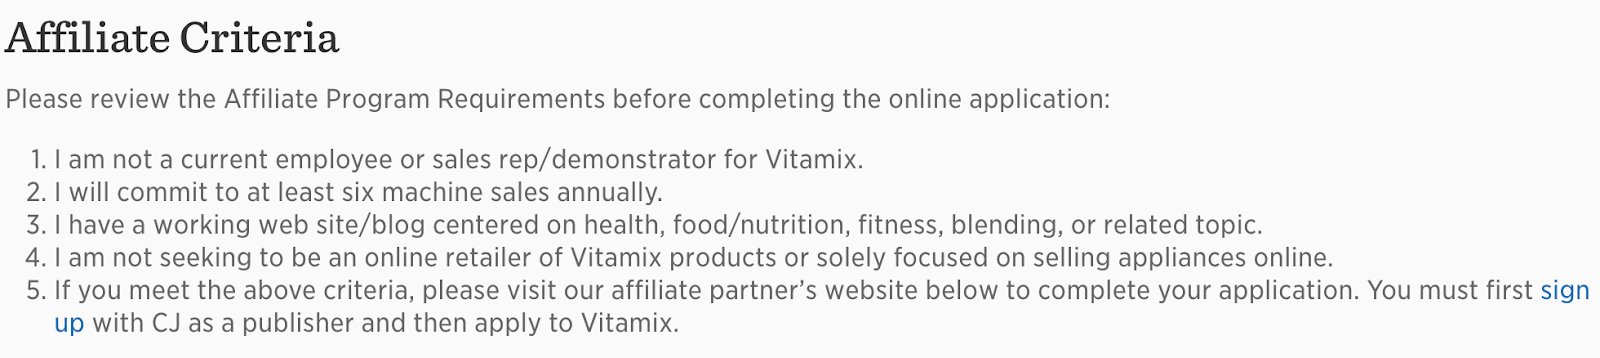 How to Become a Vitamix Affiliate   Vitamix" srcset="https://ahrefs.com/blog/wp-content/uploads/2019/10/How_to_Become_a_Vitamix_Affiliate___Vitamix.png 1600w, https://ahrefs.com/blog/wp-content/uploads/2019/10/How_to_Become_a_Vitamix_Affiliate___Vitamix-768x172.png 768w, https://ahrefs.com/blog/wp-content/uploads/2019/10/How_to_Become_a_Vitamix_Affiliate___Vitamix-680x152.png 680w" sizes="(max-width: 1600px) 100vw, 1600px